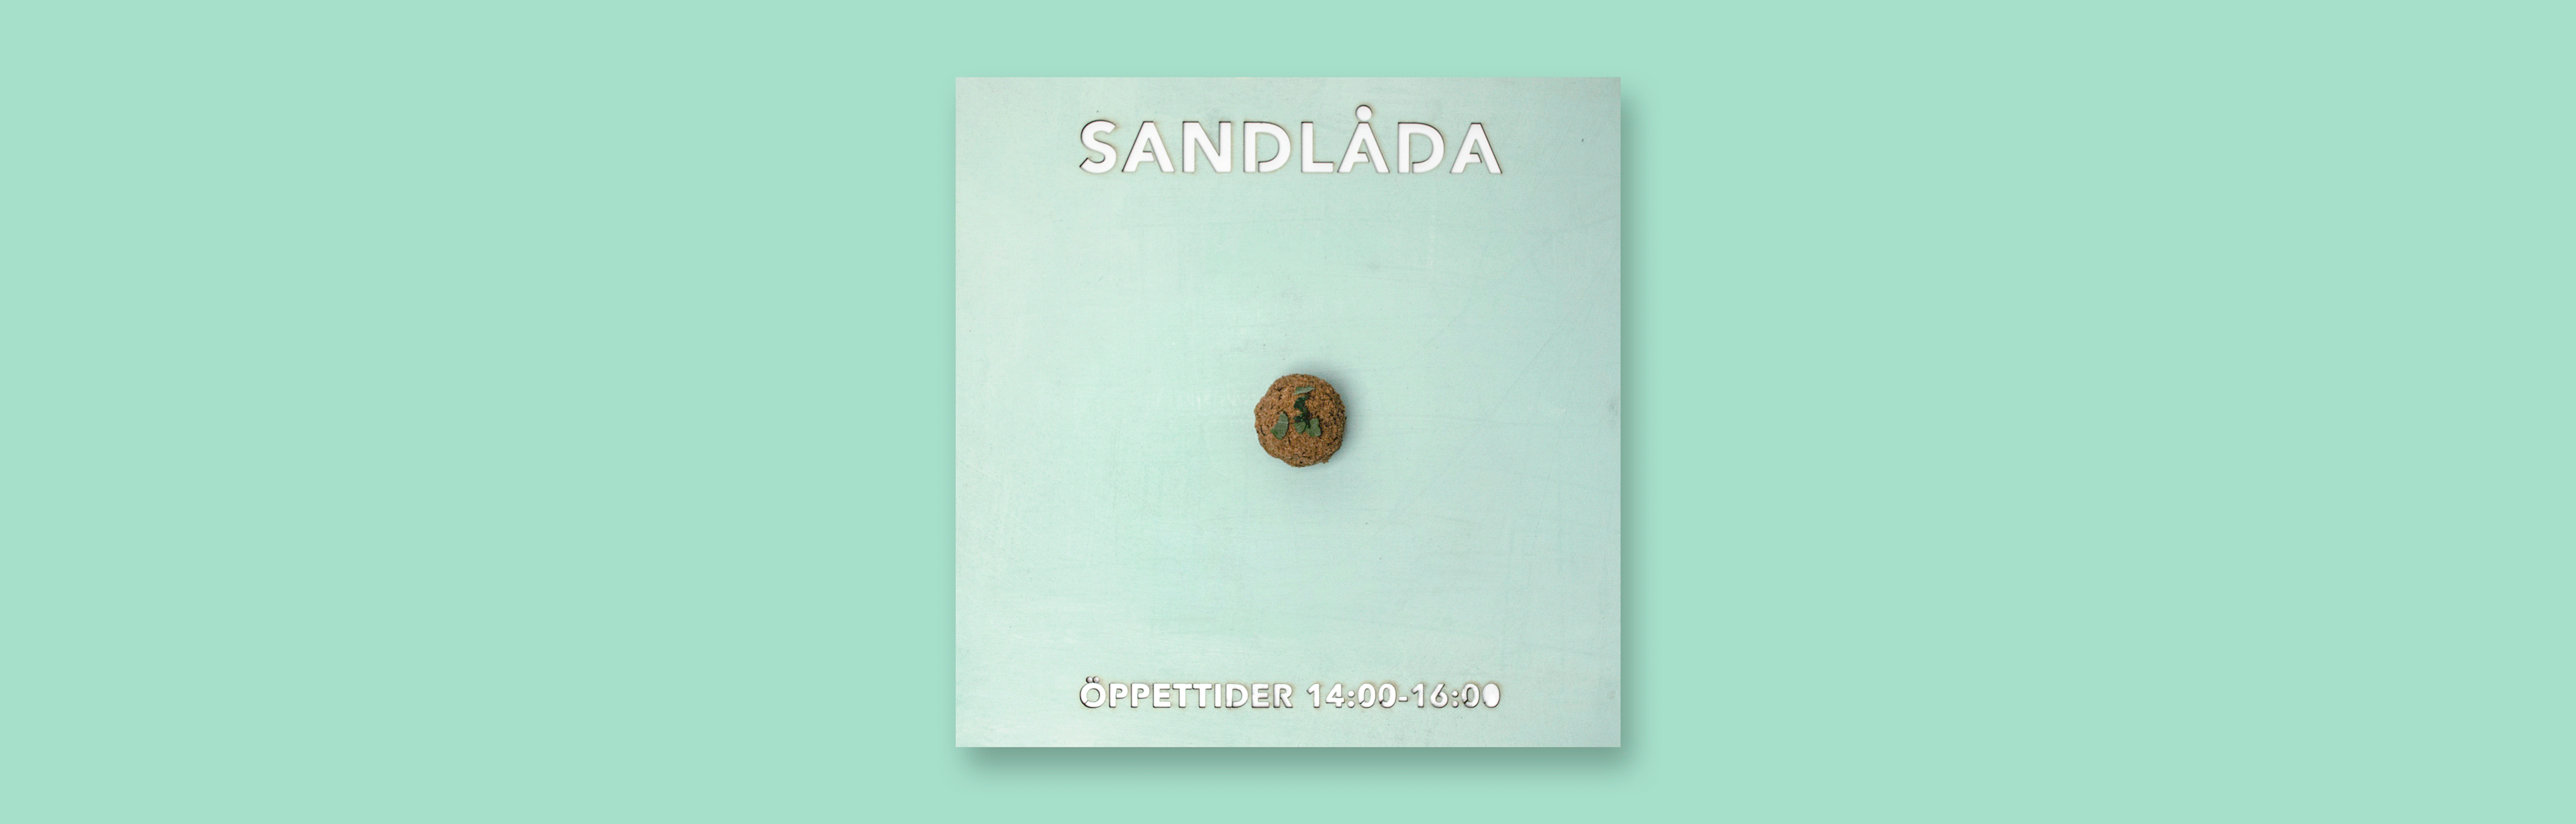 projects/-10-Sandlada-the-sandbox-restaurant/images/07-sandlada.gif